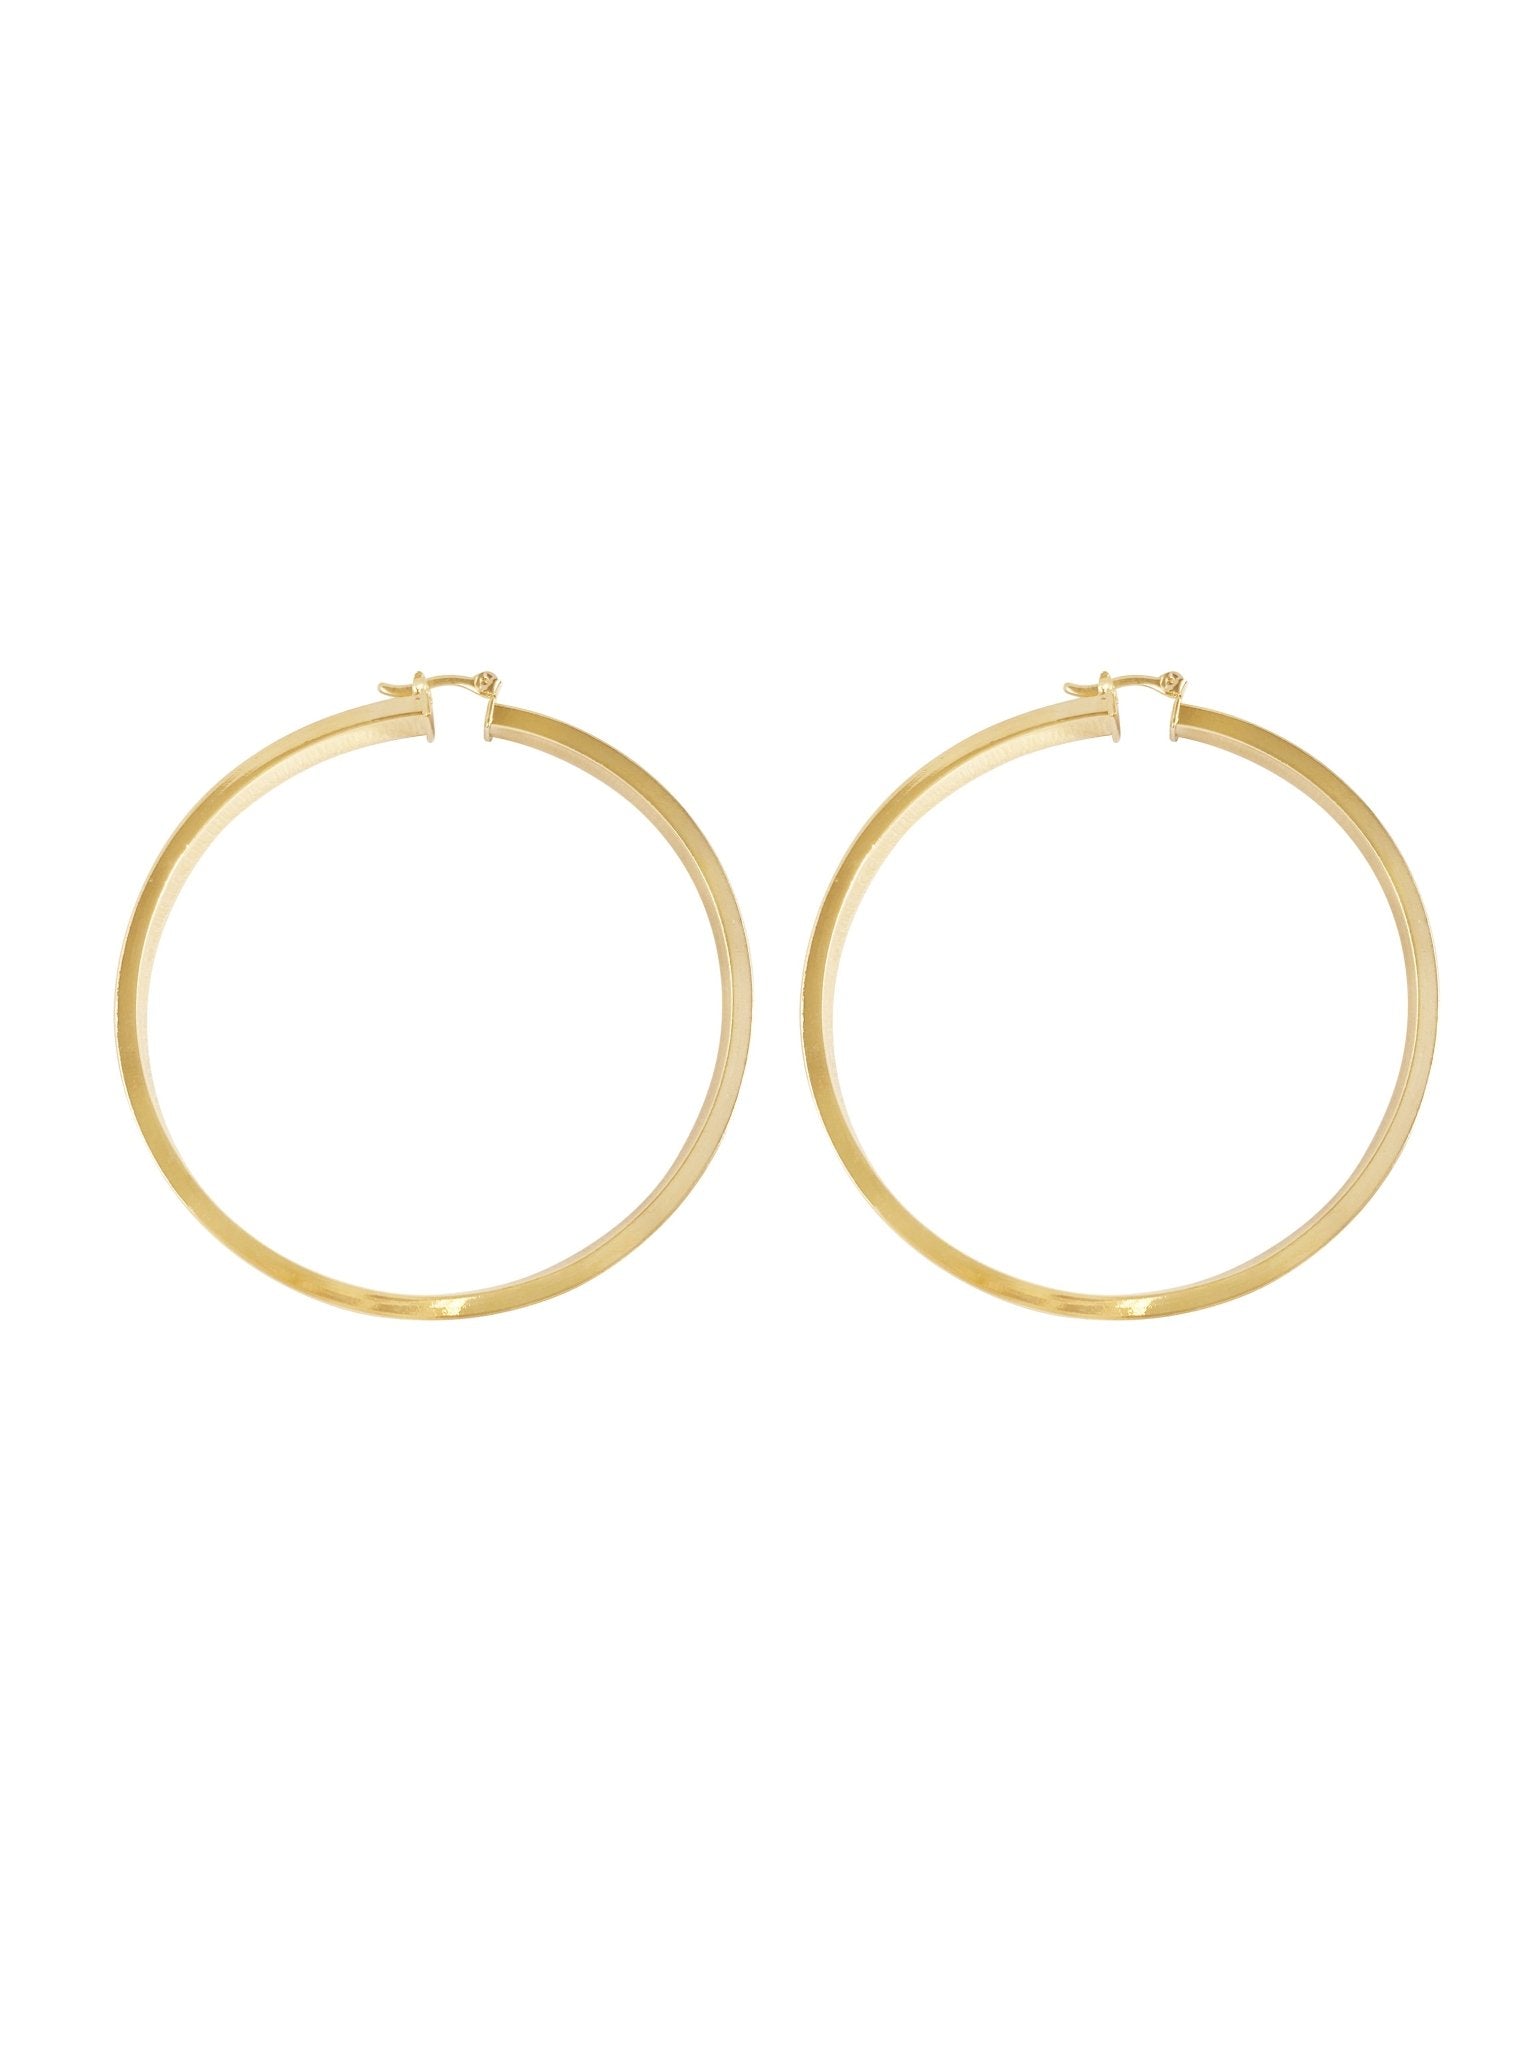 Square Gold Hoops - NOA Jewels - Earrings